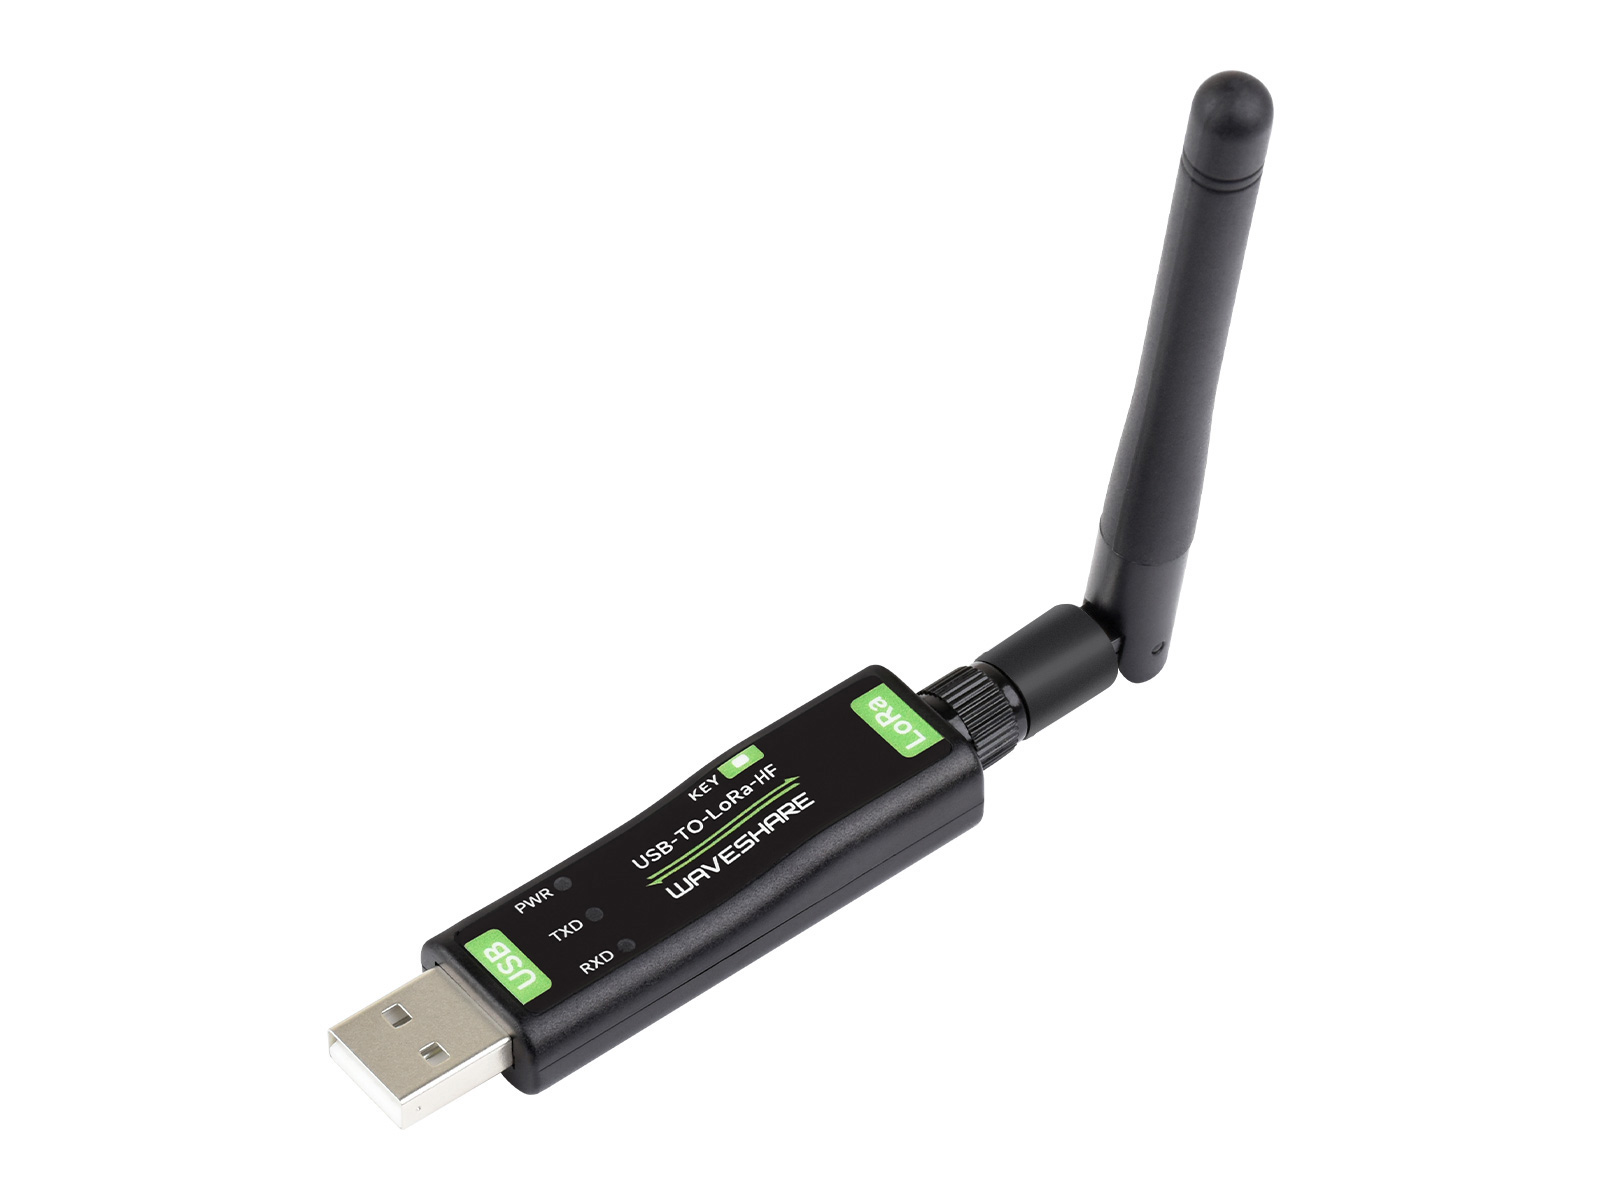 USB转LoRa数传模块 基于SX1262方案 无线数传终端 工业农业数据采集 适用于HF频段 采用TCXO晶振